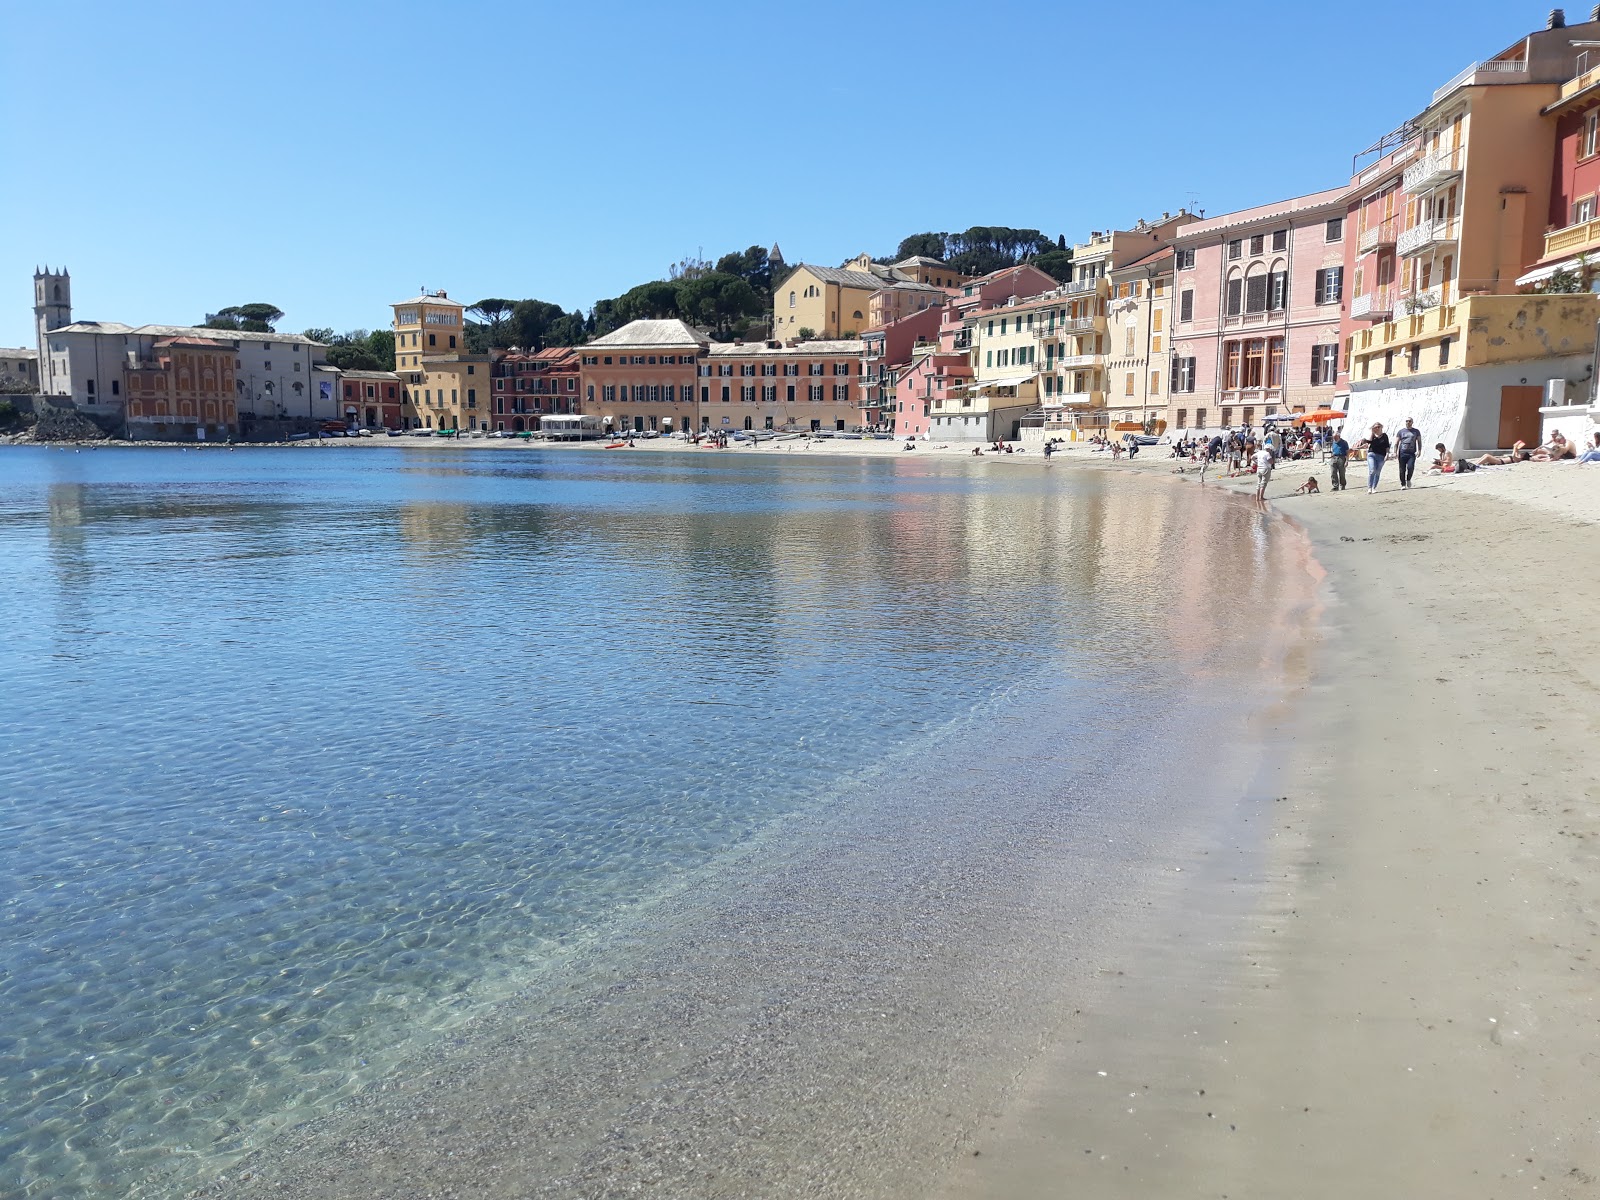 Photo of Spiaggia Baia del Silenzio with blue water surface